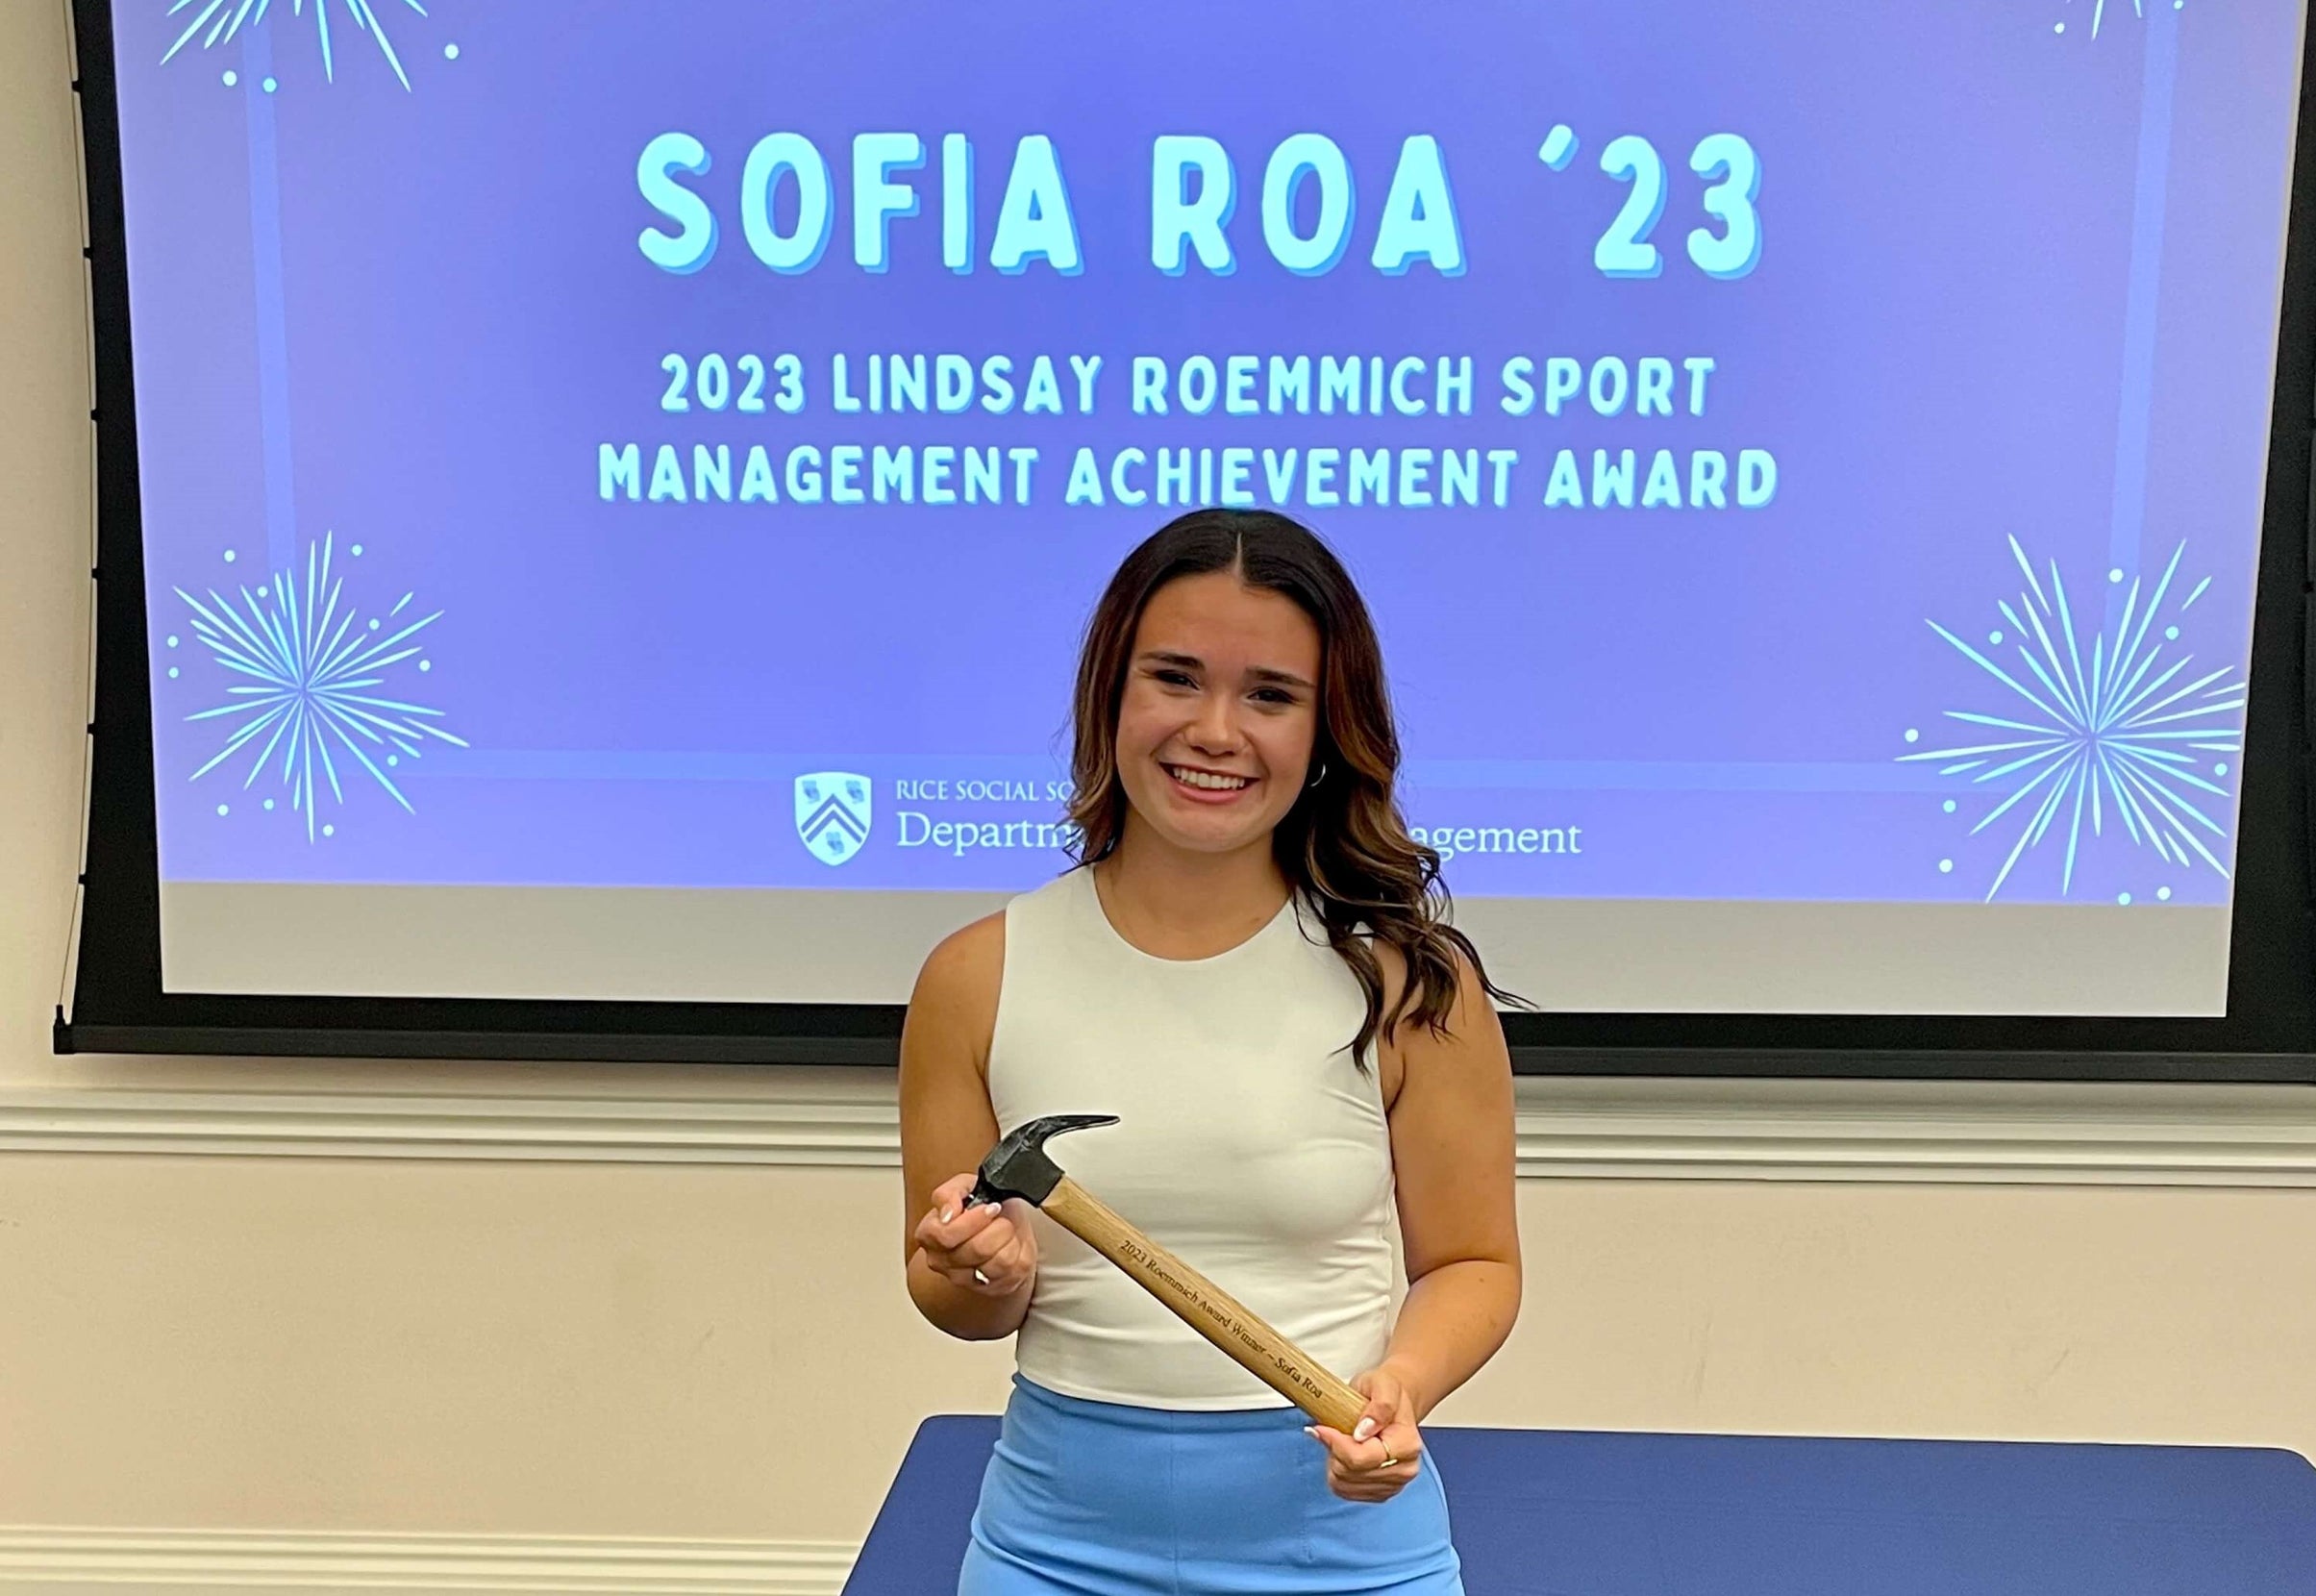 Sofia Roa - 2023 Roemmich Award recipient